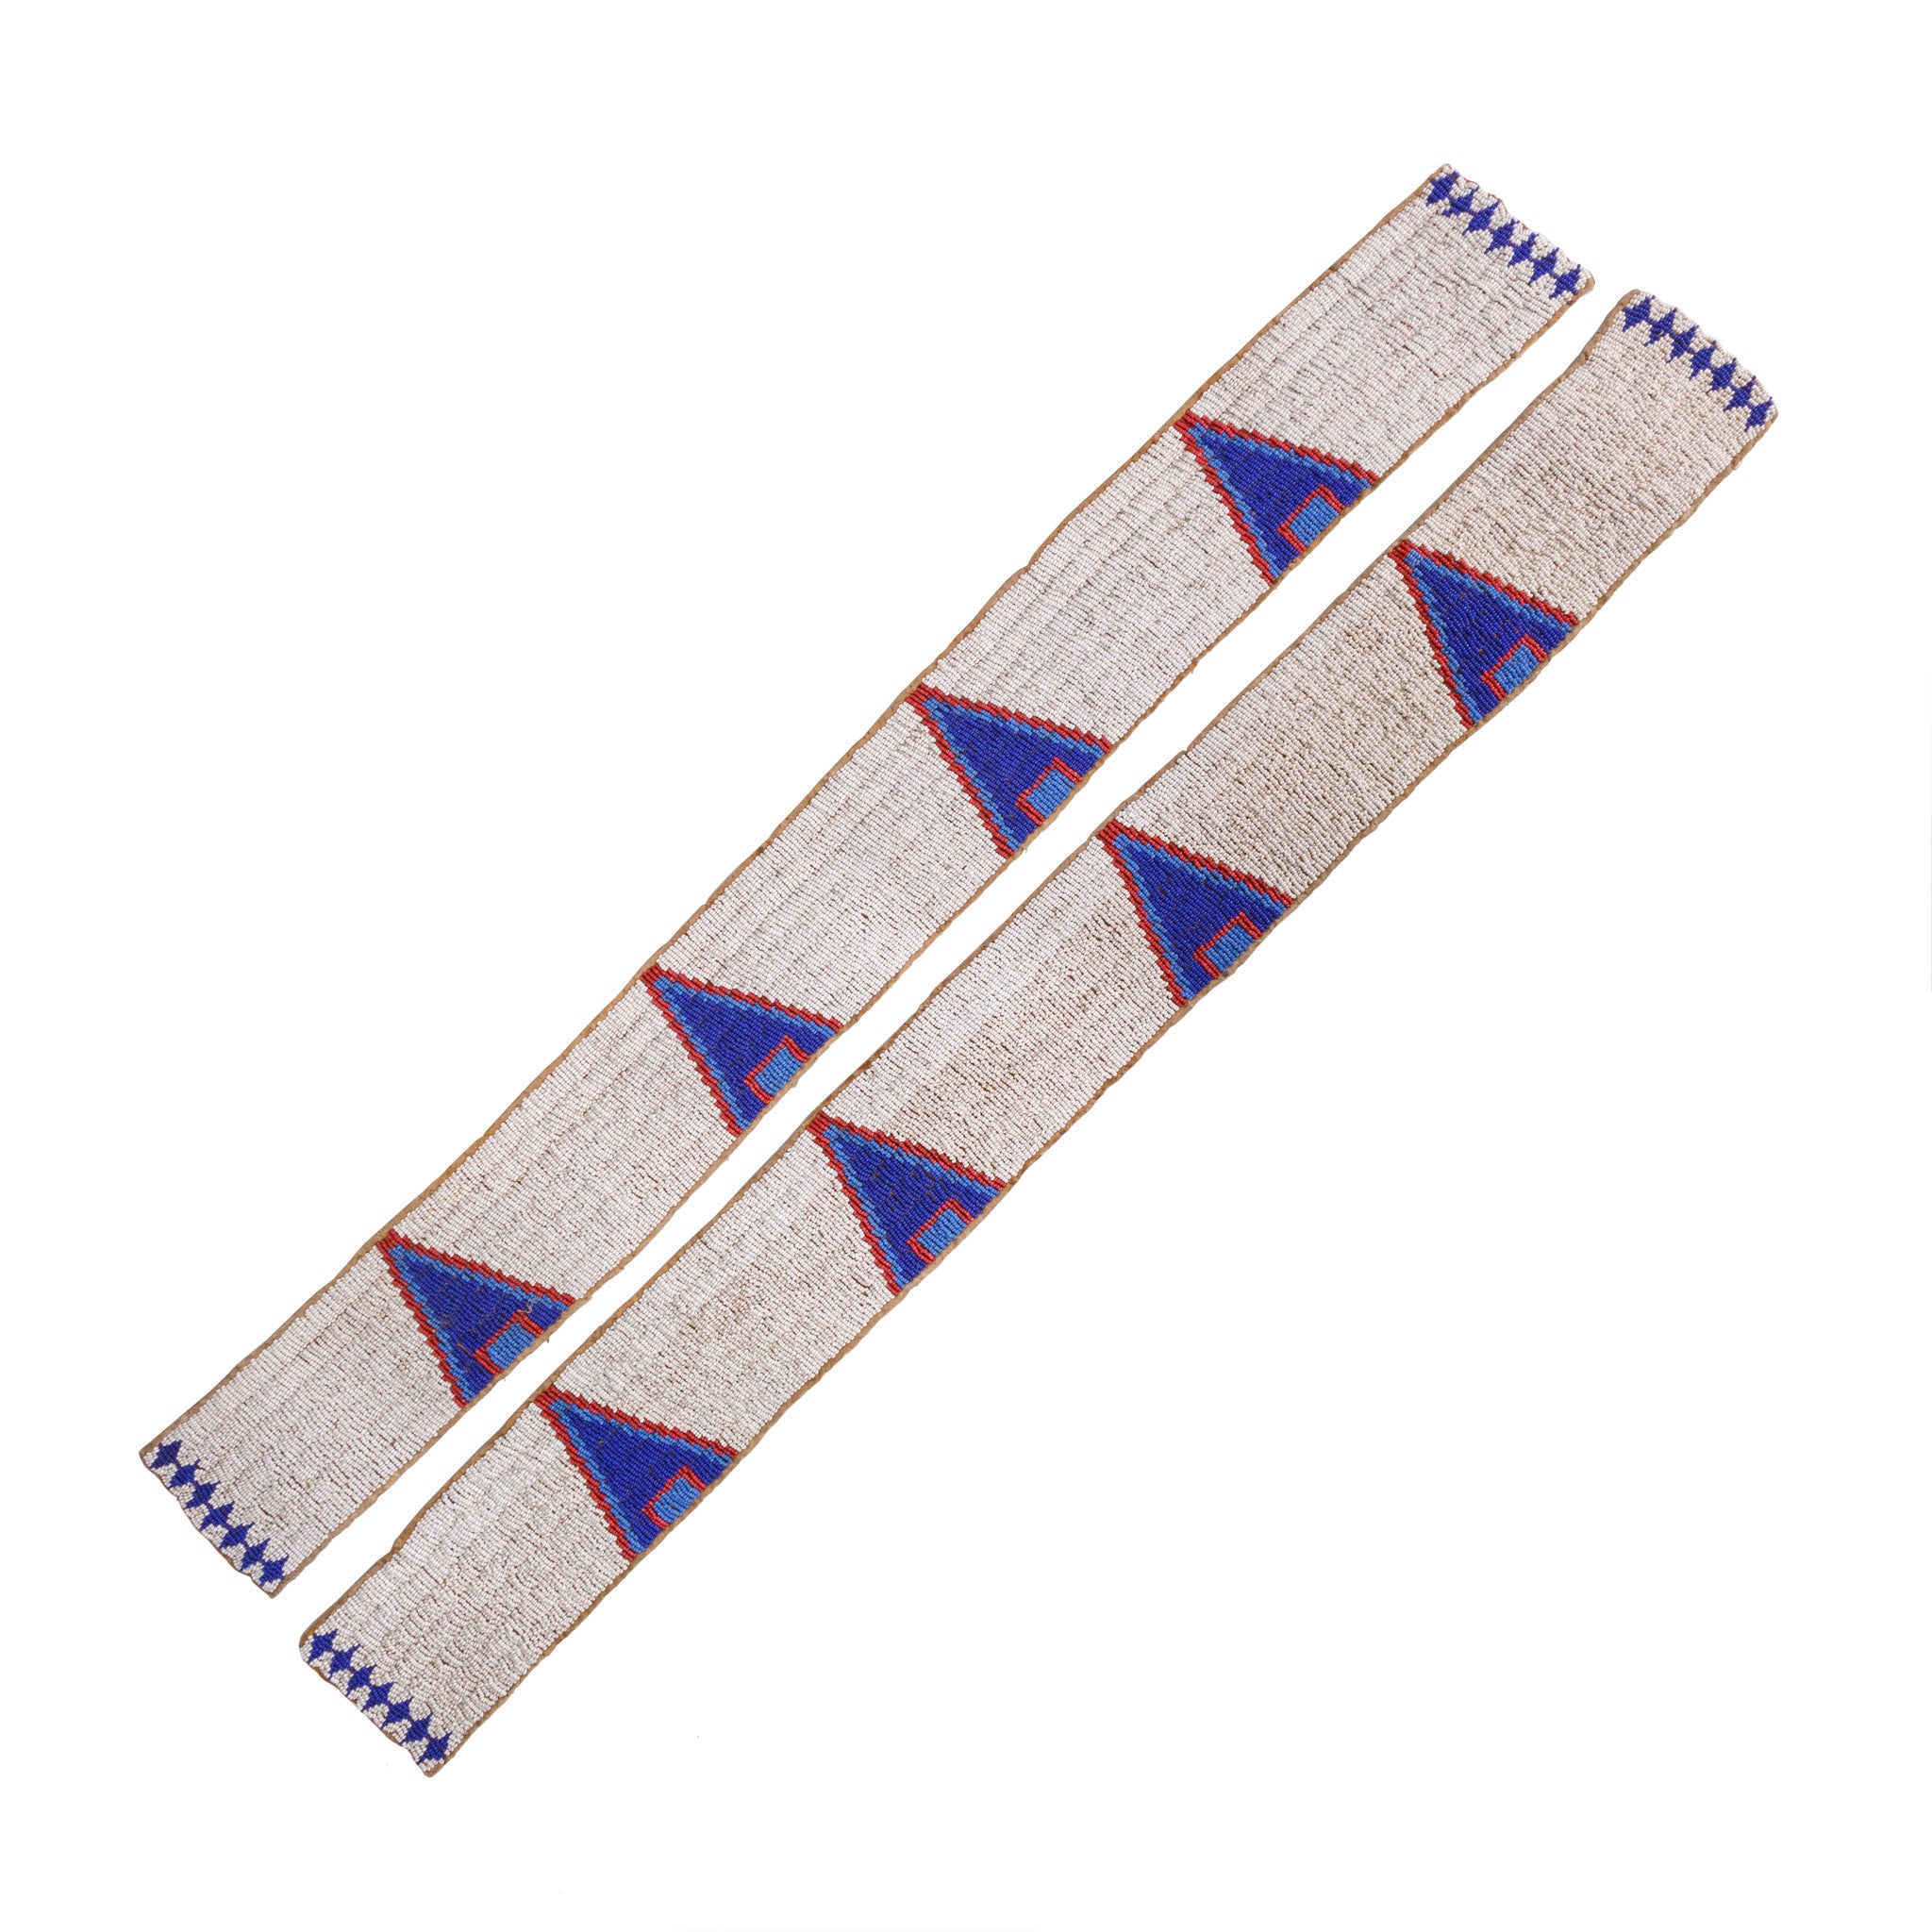 Cheyenne Shirt Strips, Native, Beadwork, Blanket Strip